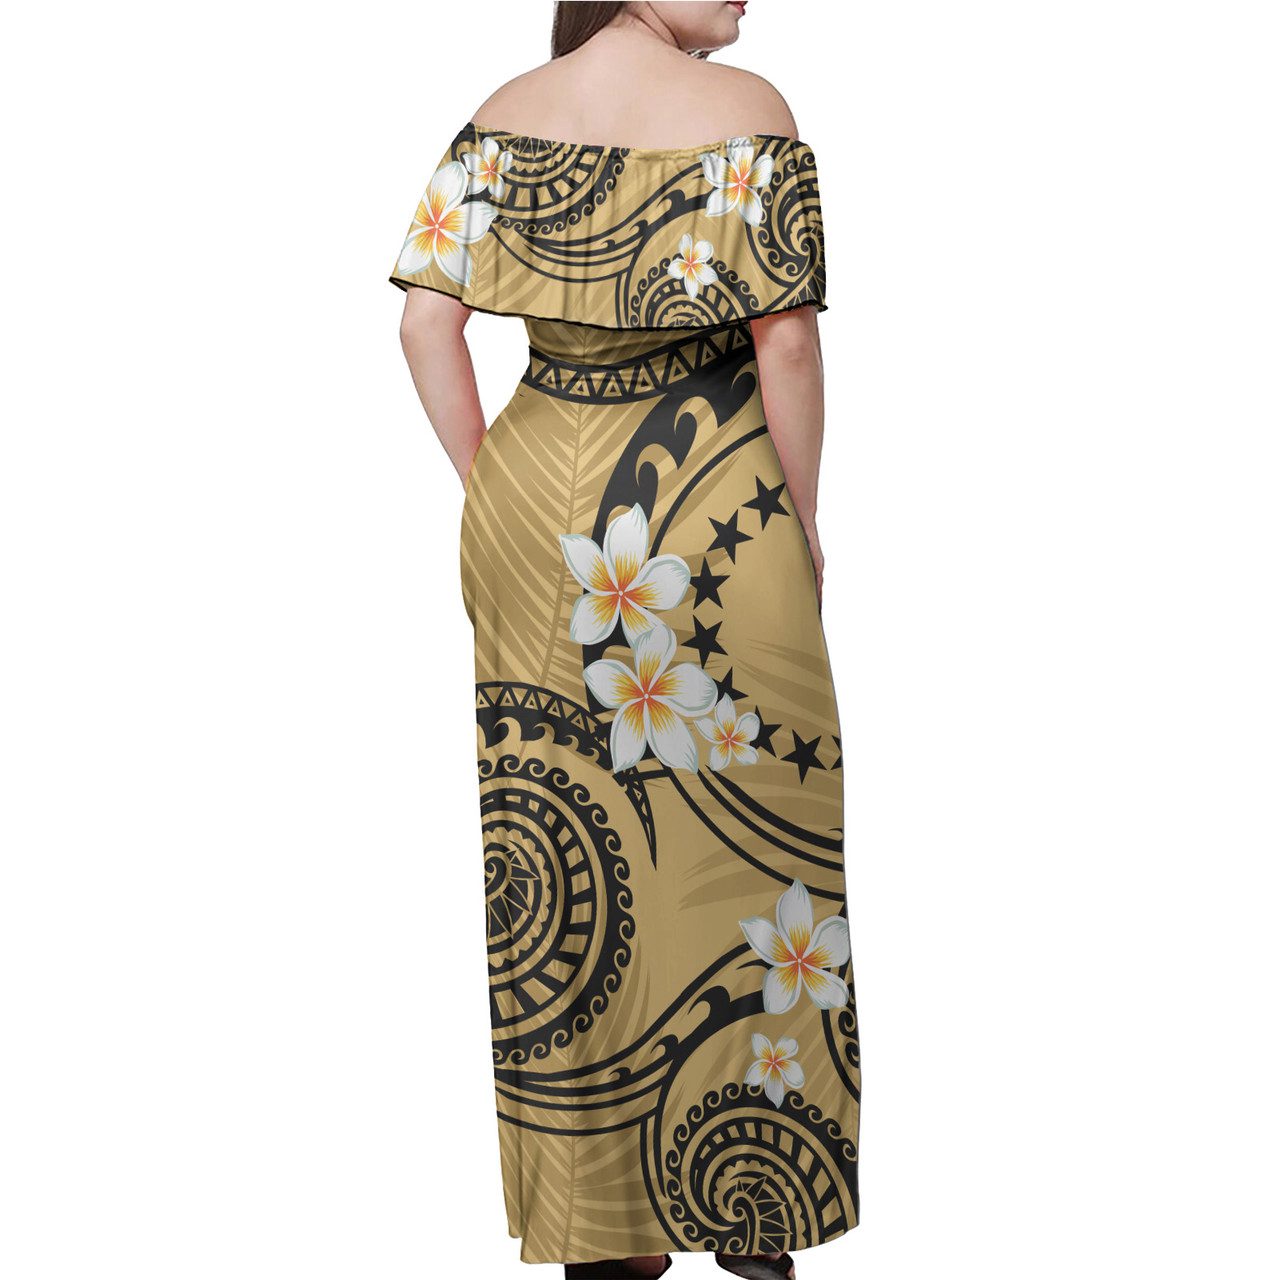 Cook Islands Off Shoulder Long Dress Plumeria Flowers Tribal Motif Yellow Version